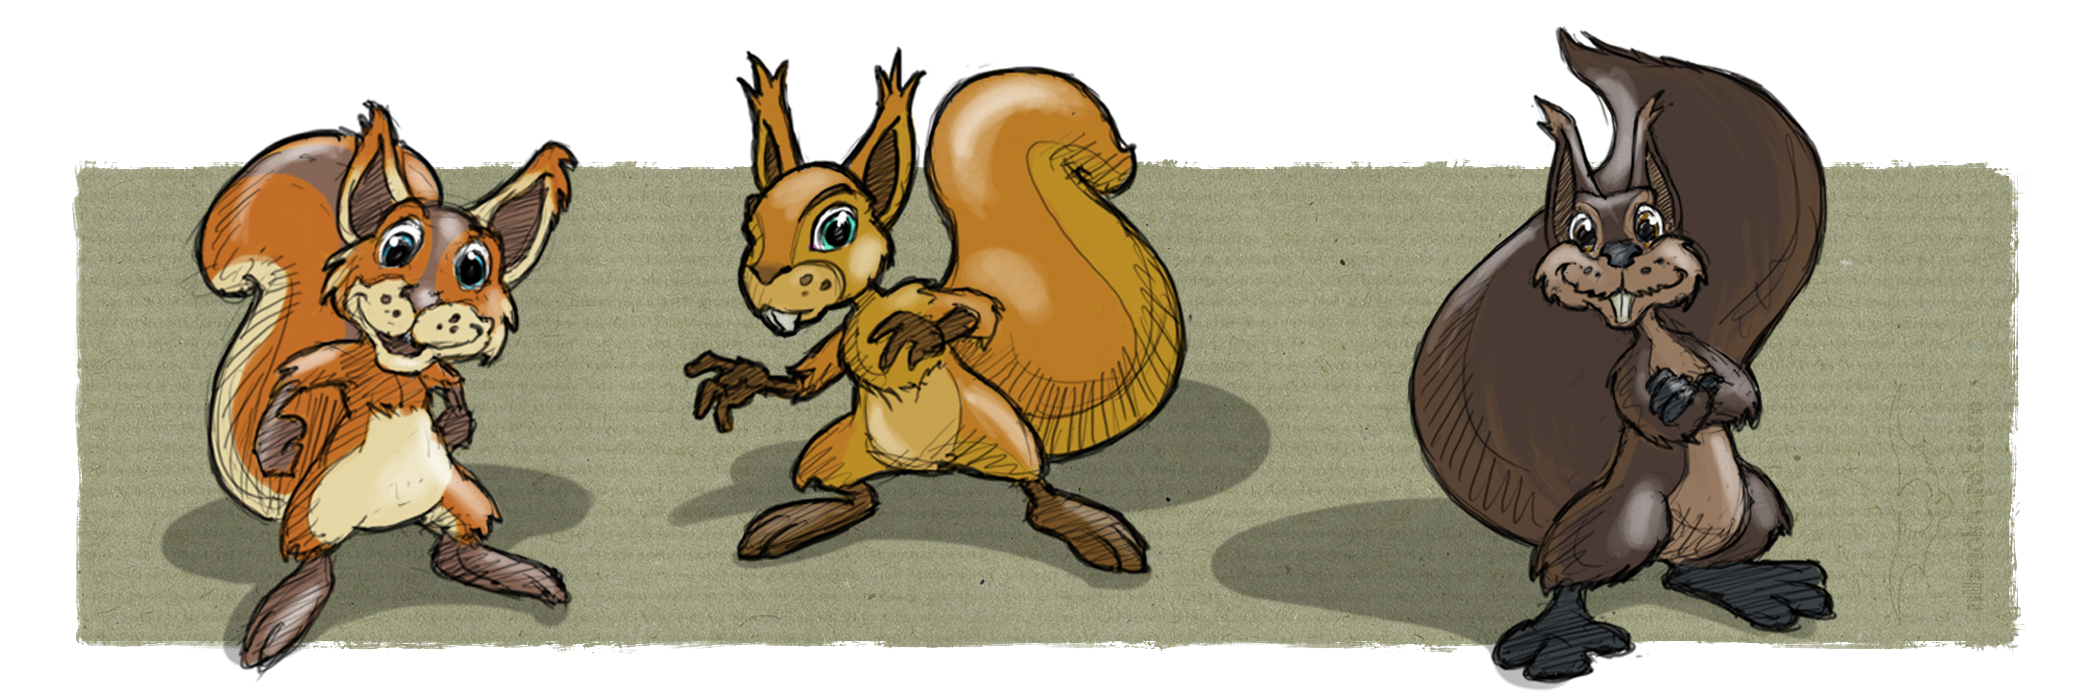 Character development squirrels